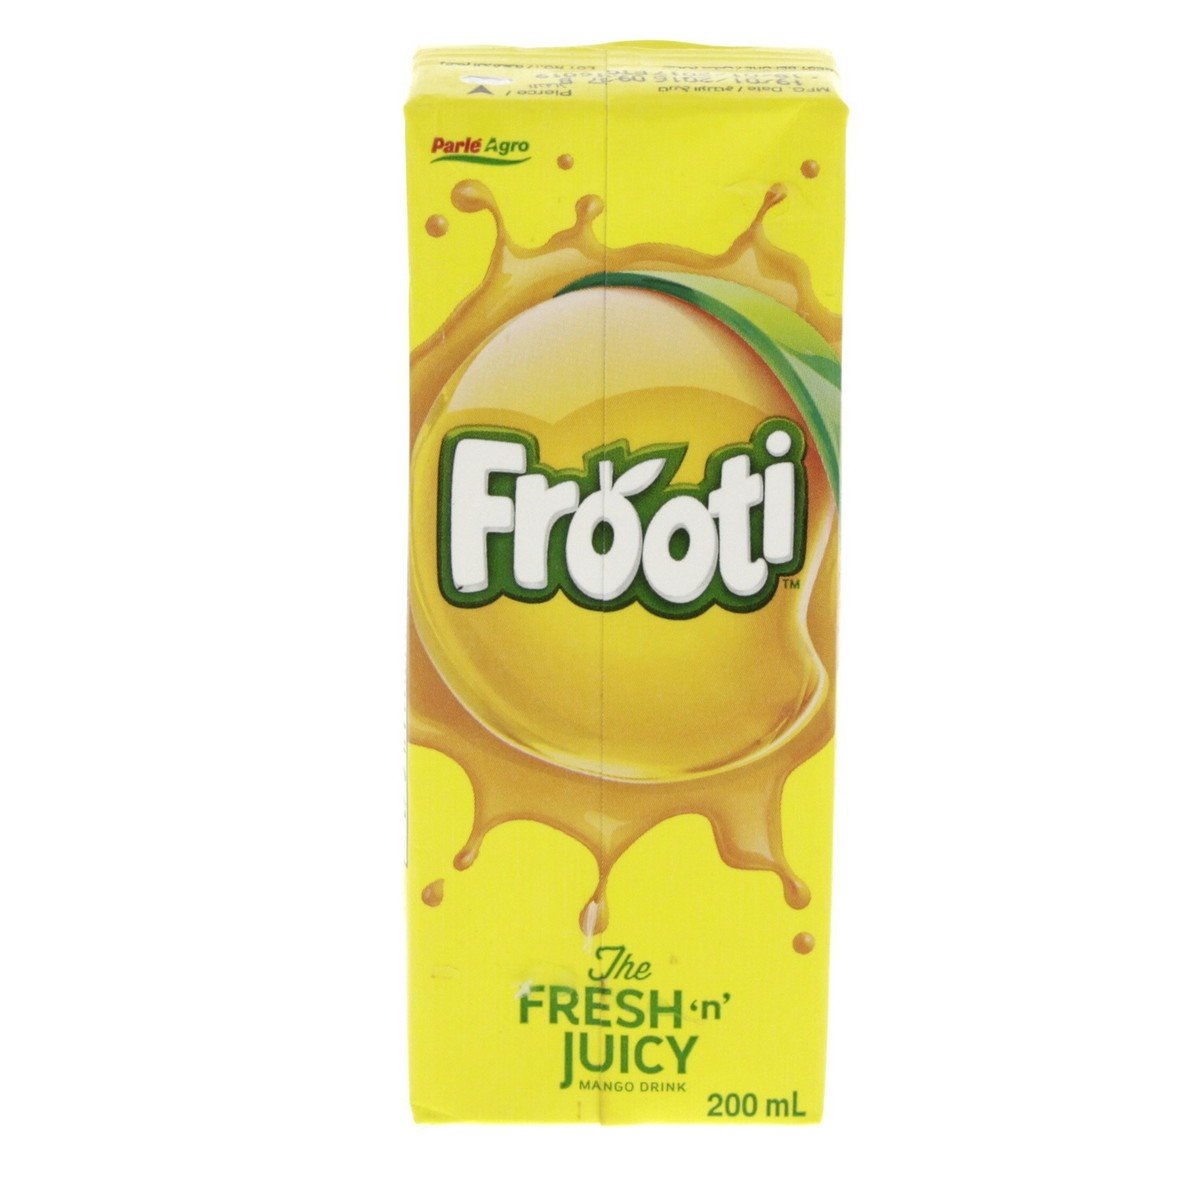 Parle Agro Frooti Mango Juice 200 ml